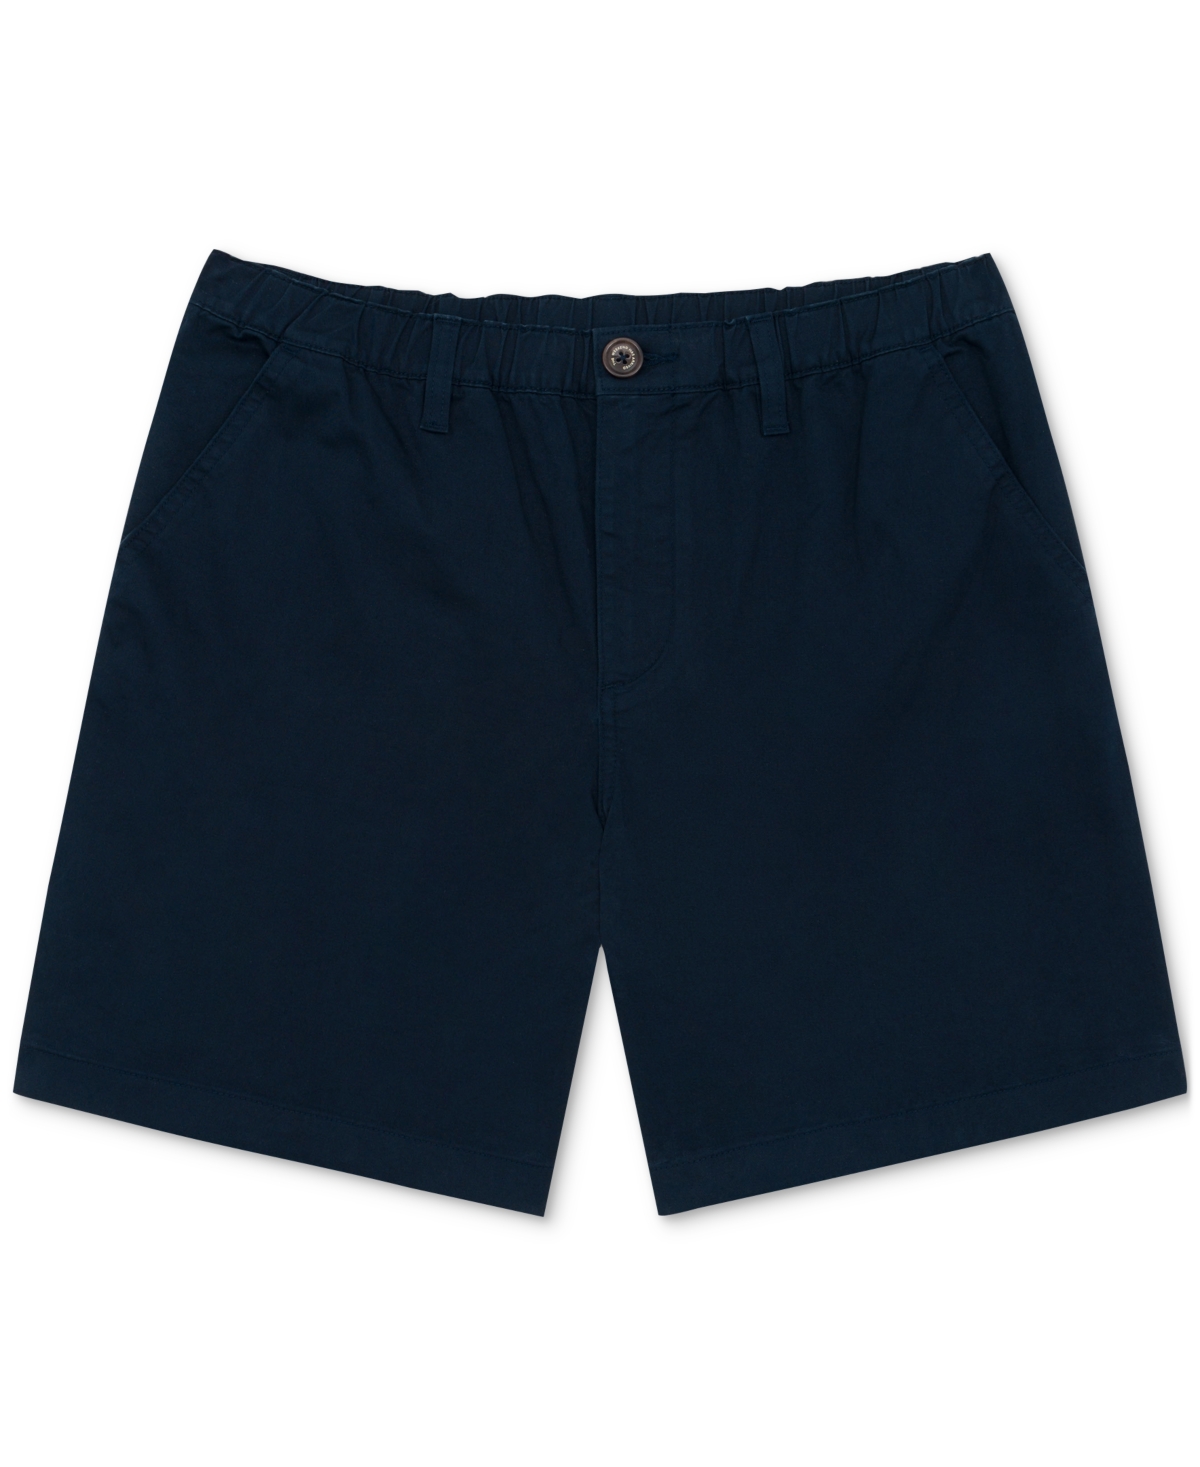 Men's The Armadas Stretch 8" Shorts - Dark Blue